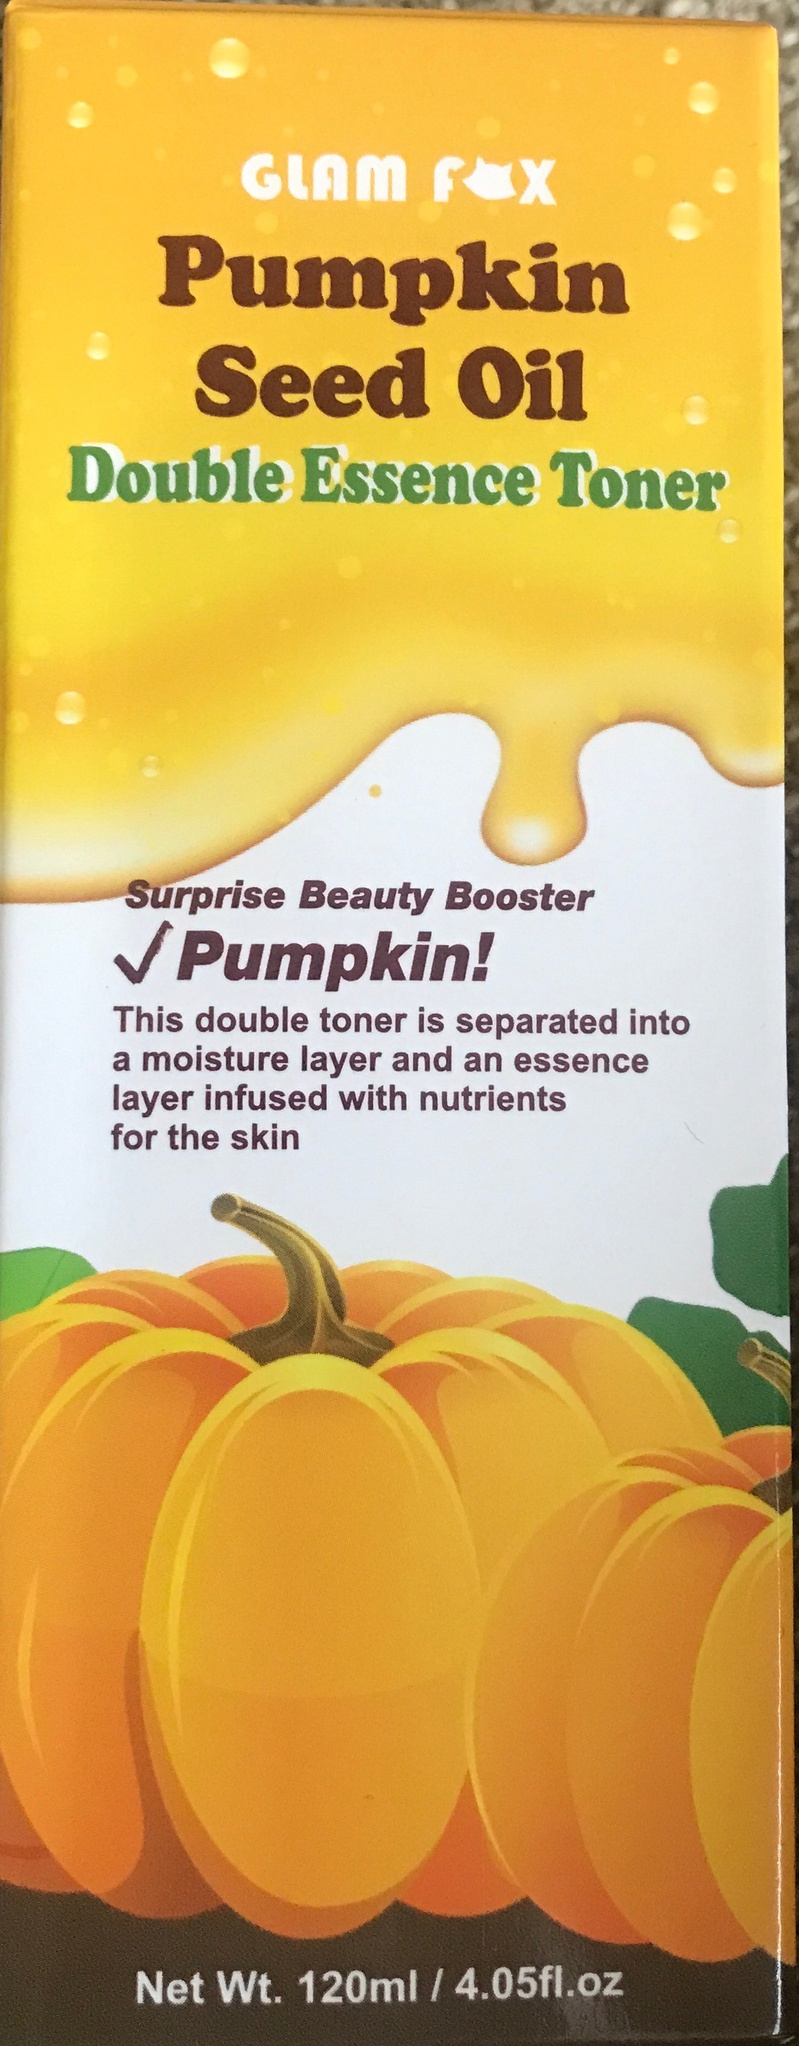 glamfox Pumpkin Seed Oil Double Essence Toner